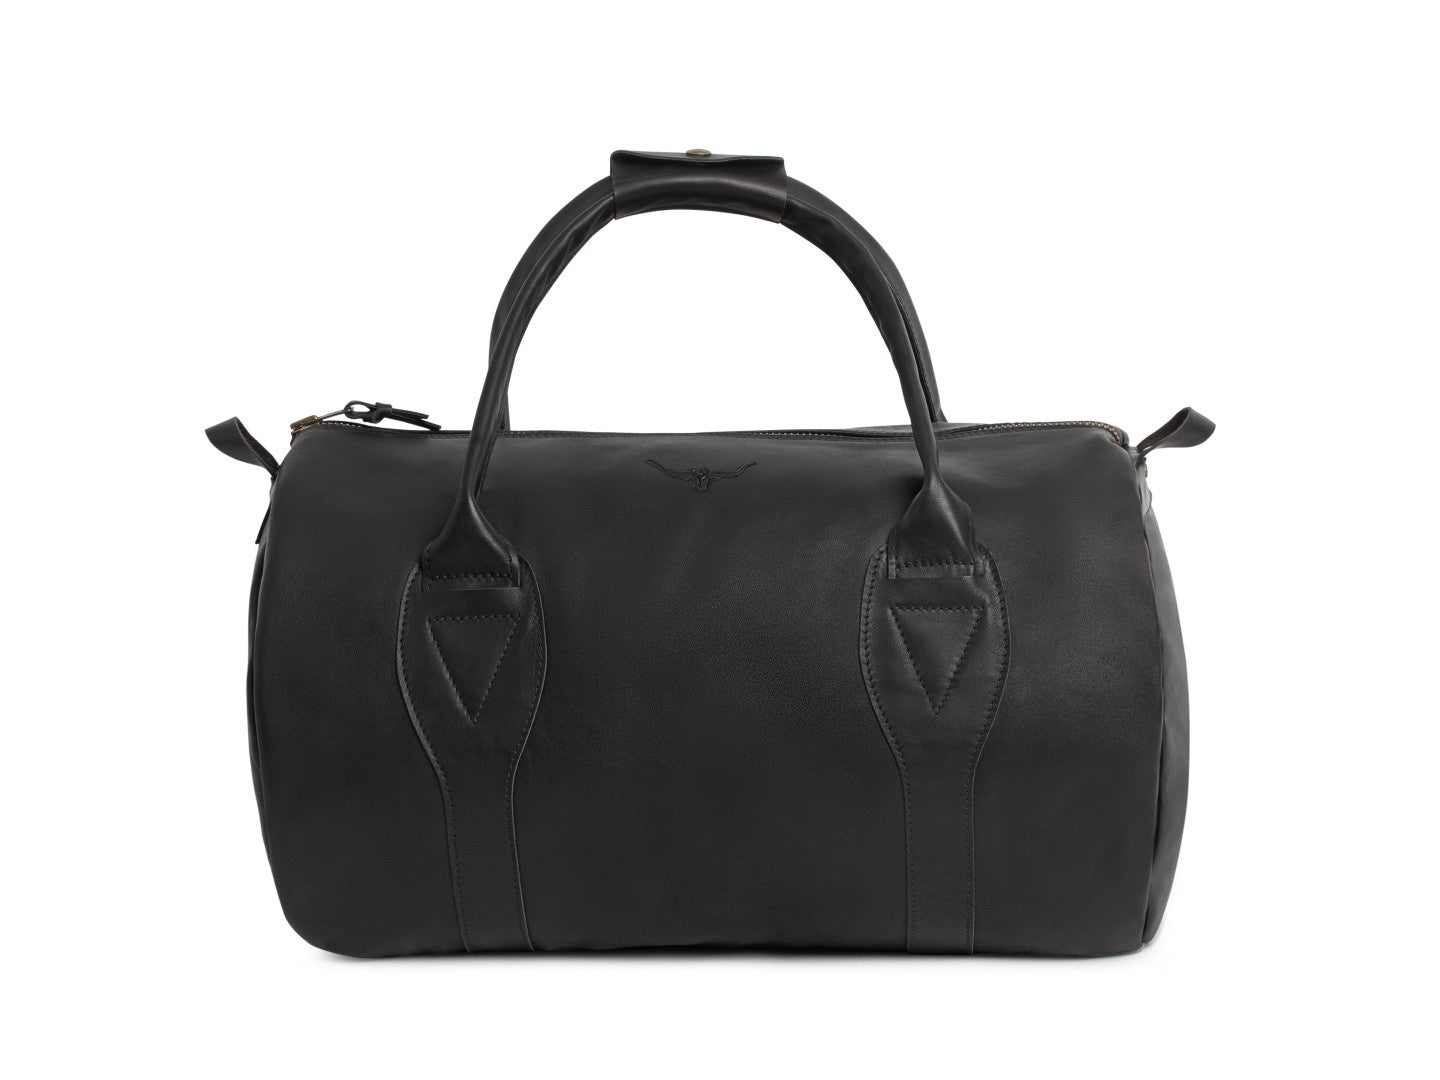 RMW Leather Ute Bag - Thomson's Suits Ltd - Black - - 59038